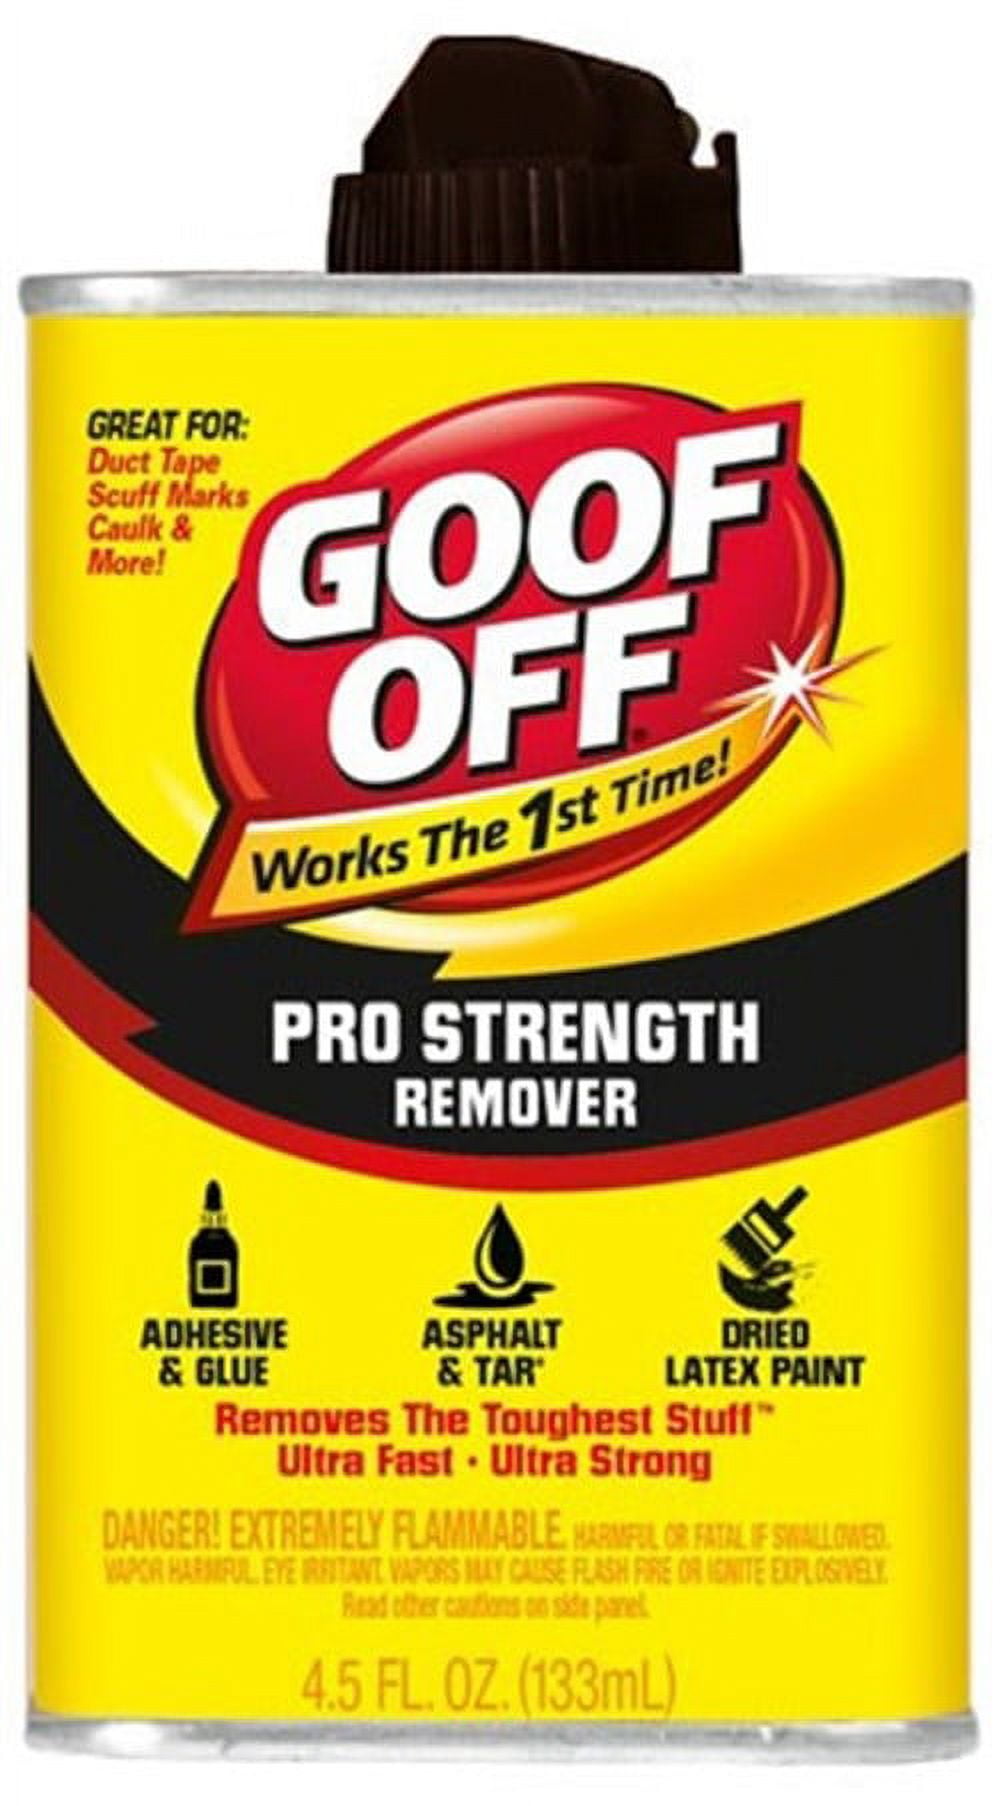  Goof Off FG790 Gunk Adhesives Remover, 12 oz, Bottle, Light  Orange : Arts, Crafts & Sewing